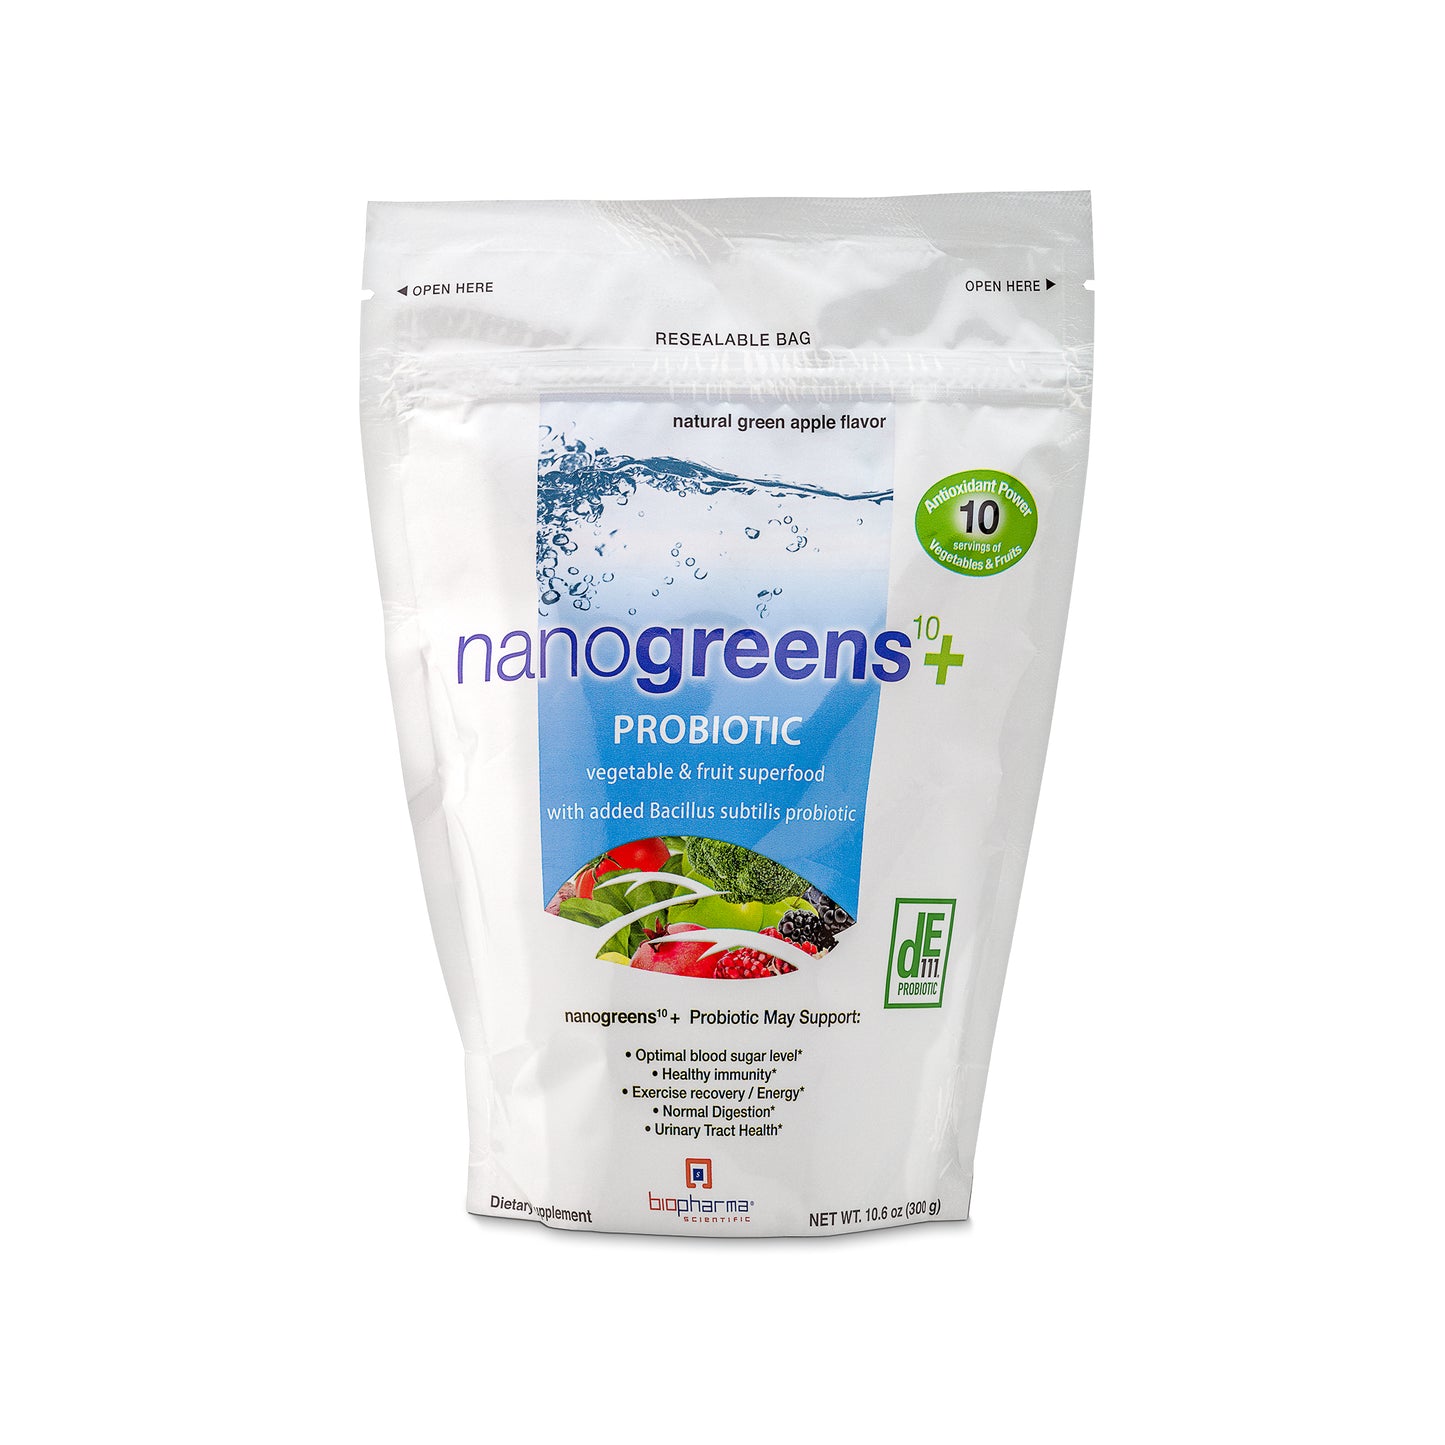 nanogreens+ probiotic green apple fruit and vegetable superfood powder supplement - front side